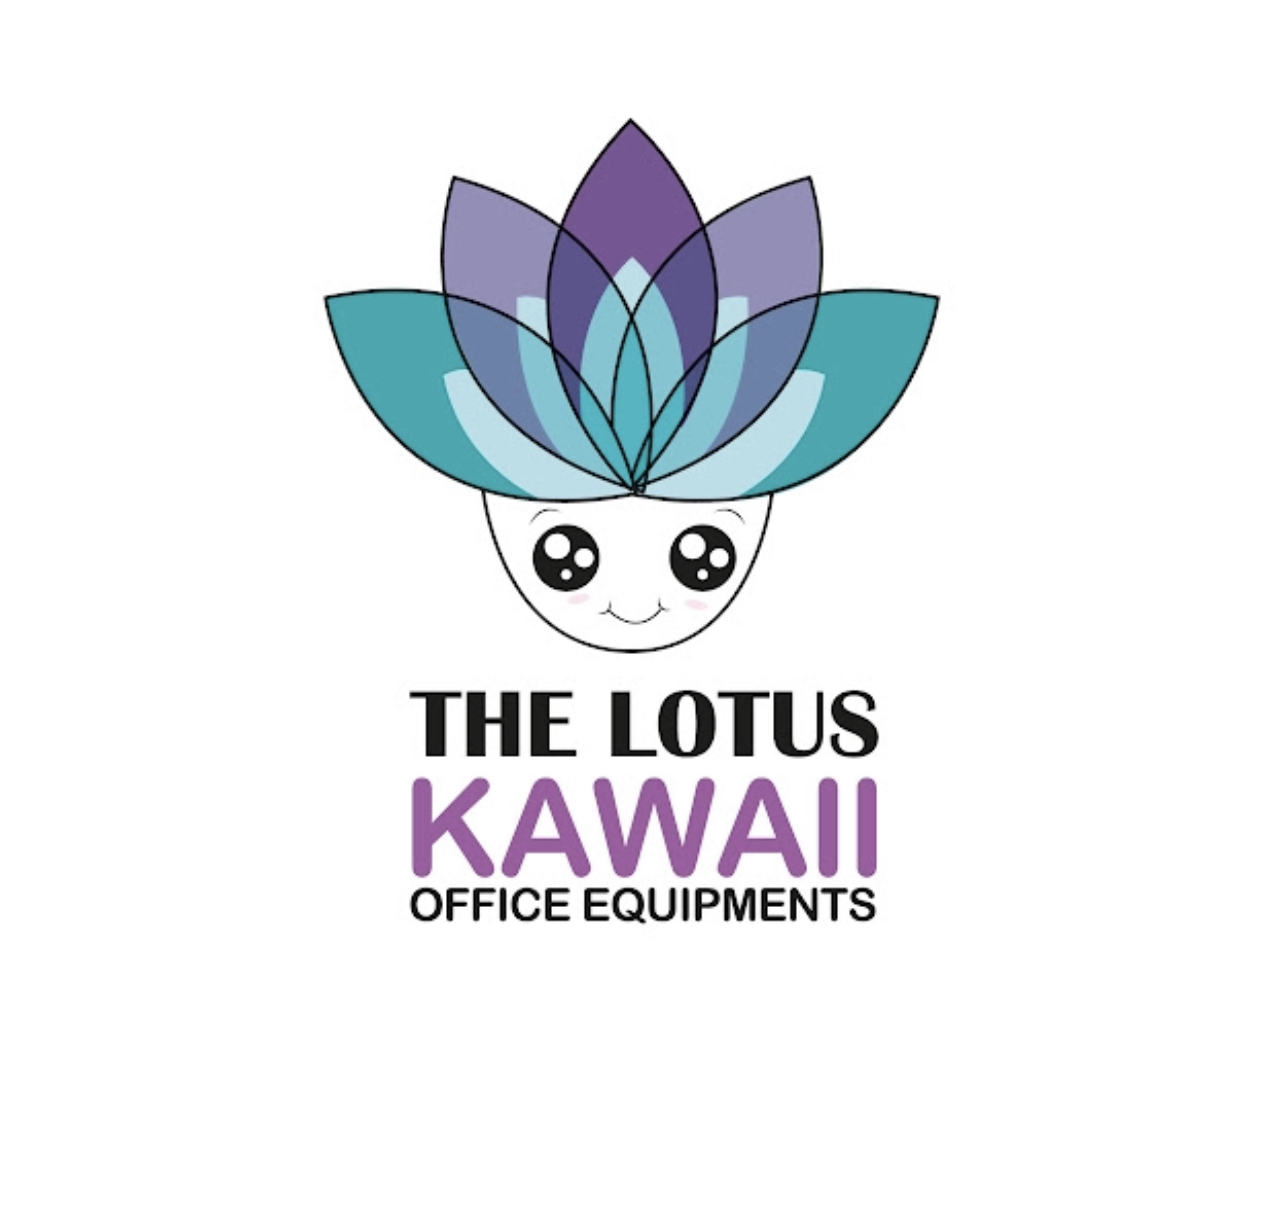 The Lotus Kawaii Office Equipment